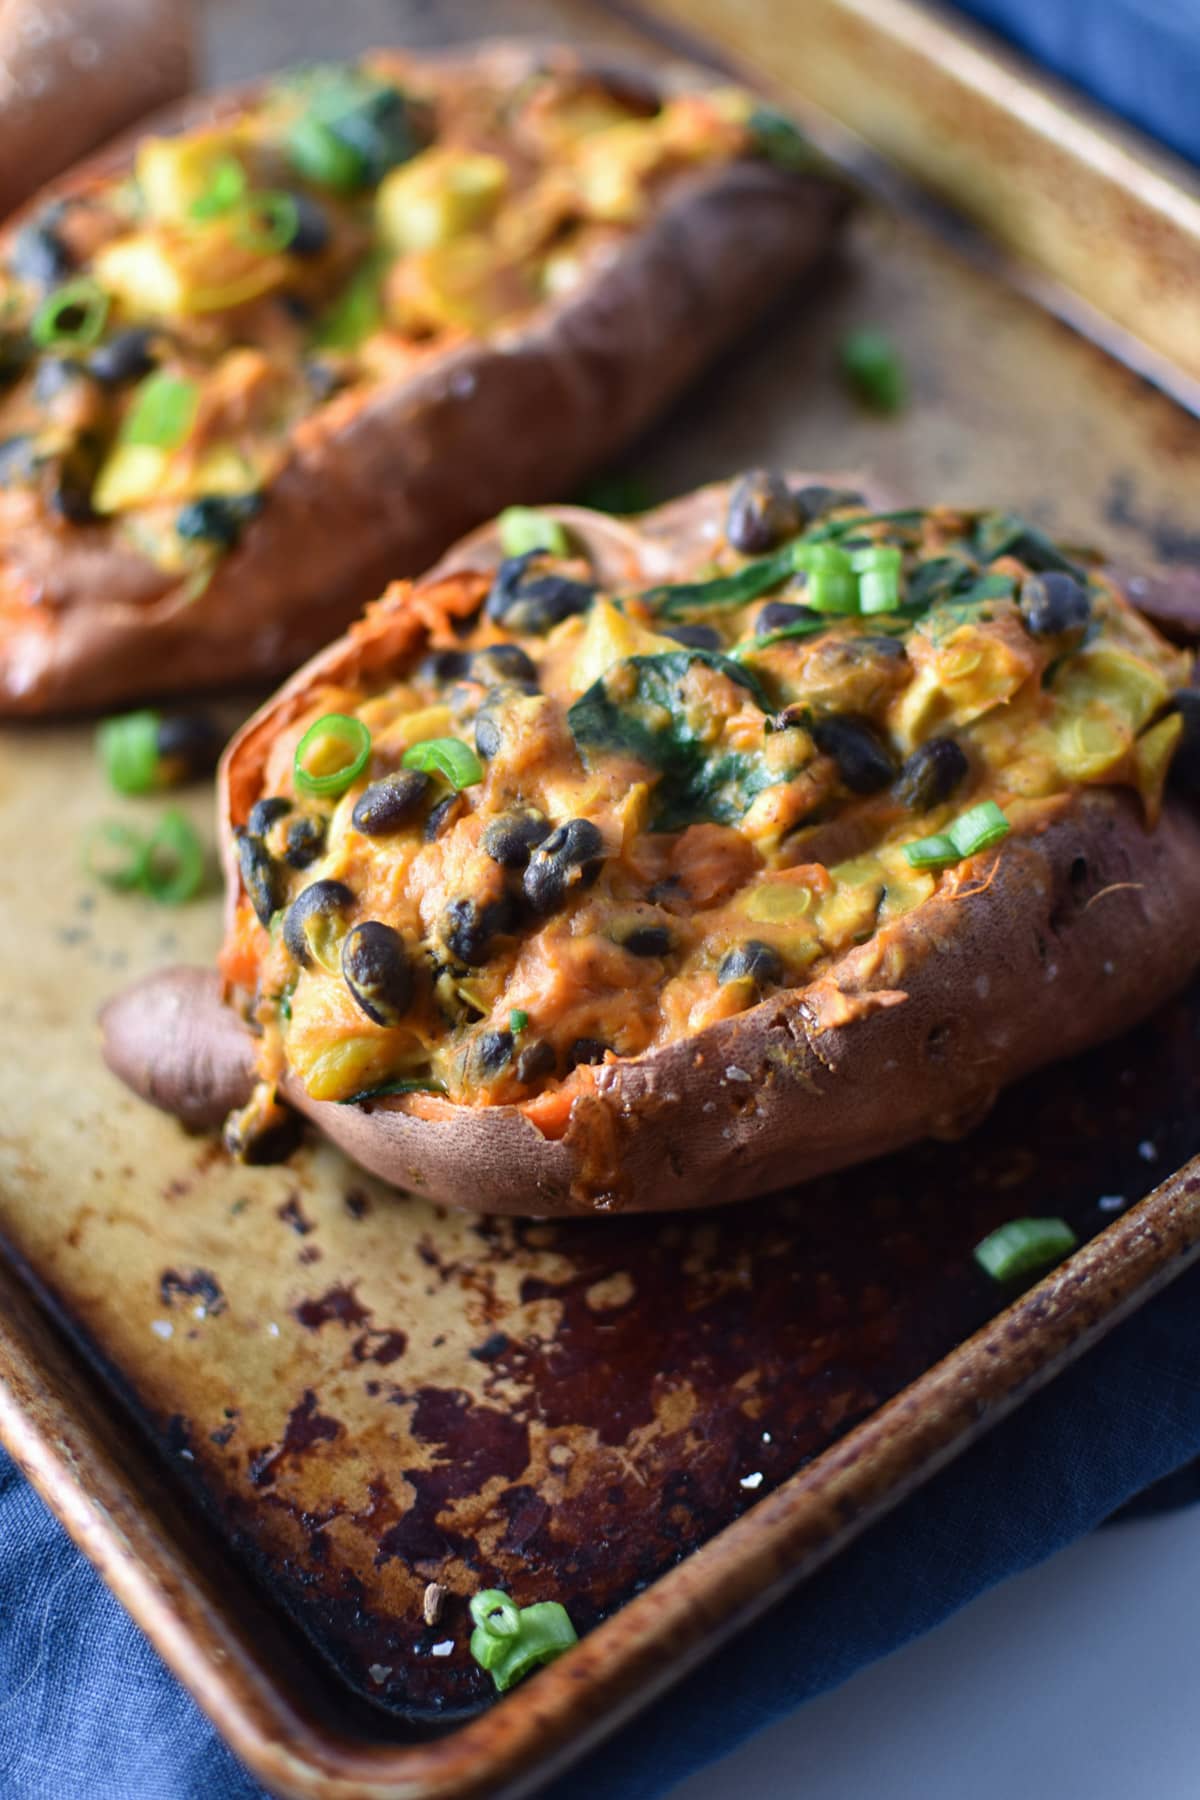 Vegan Mexican Stuffed Sweet Potatoes | The Dizzy Cook